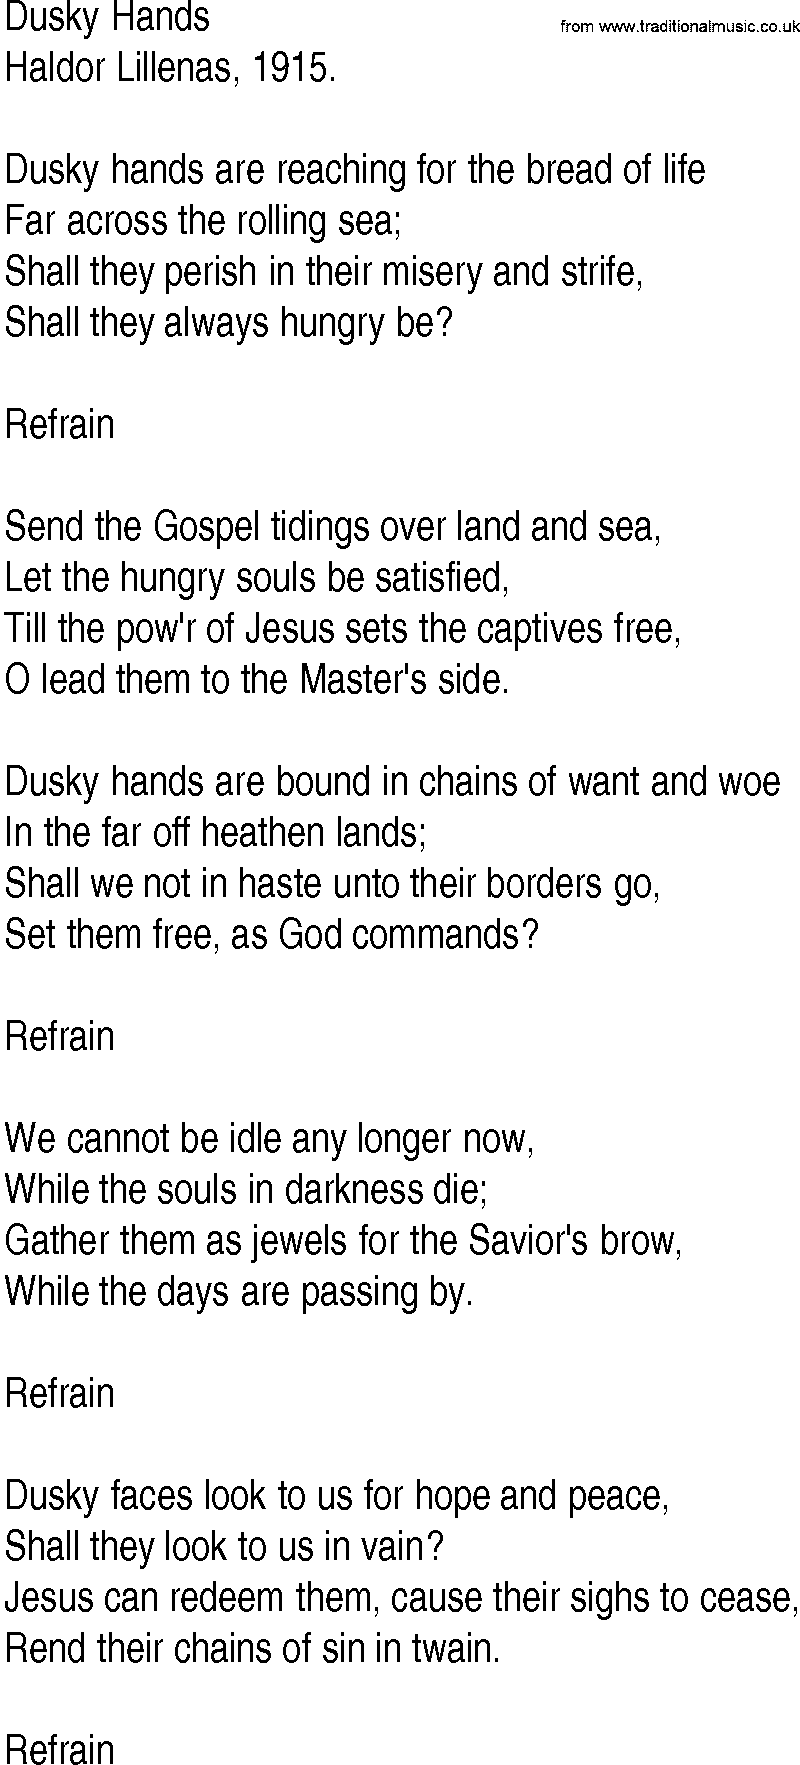 Hymn and Gospel Song: Dusky Hands by Haldor Lillenas lyrics